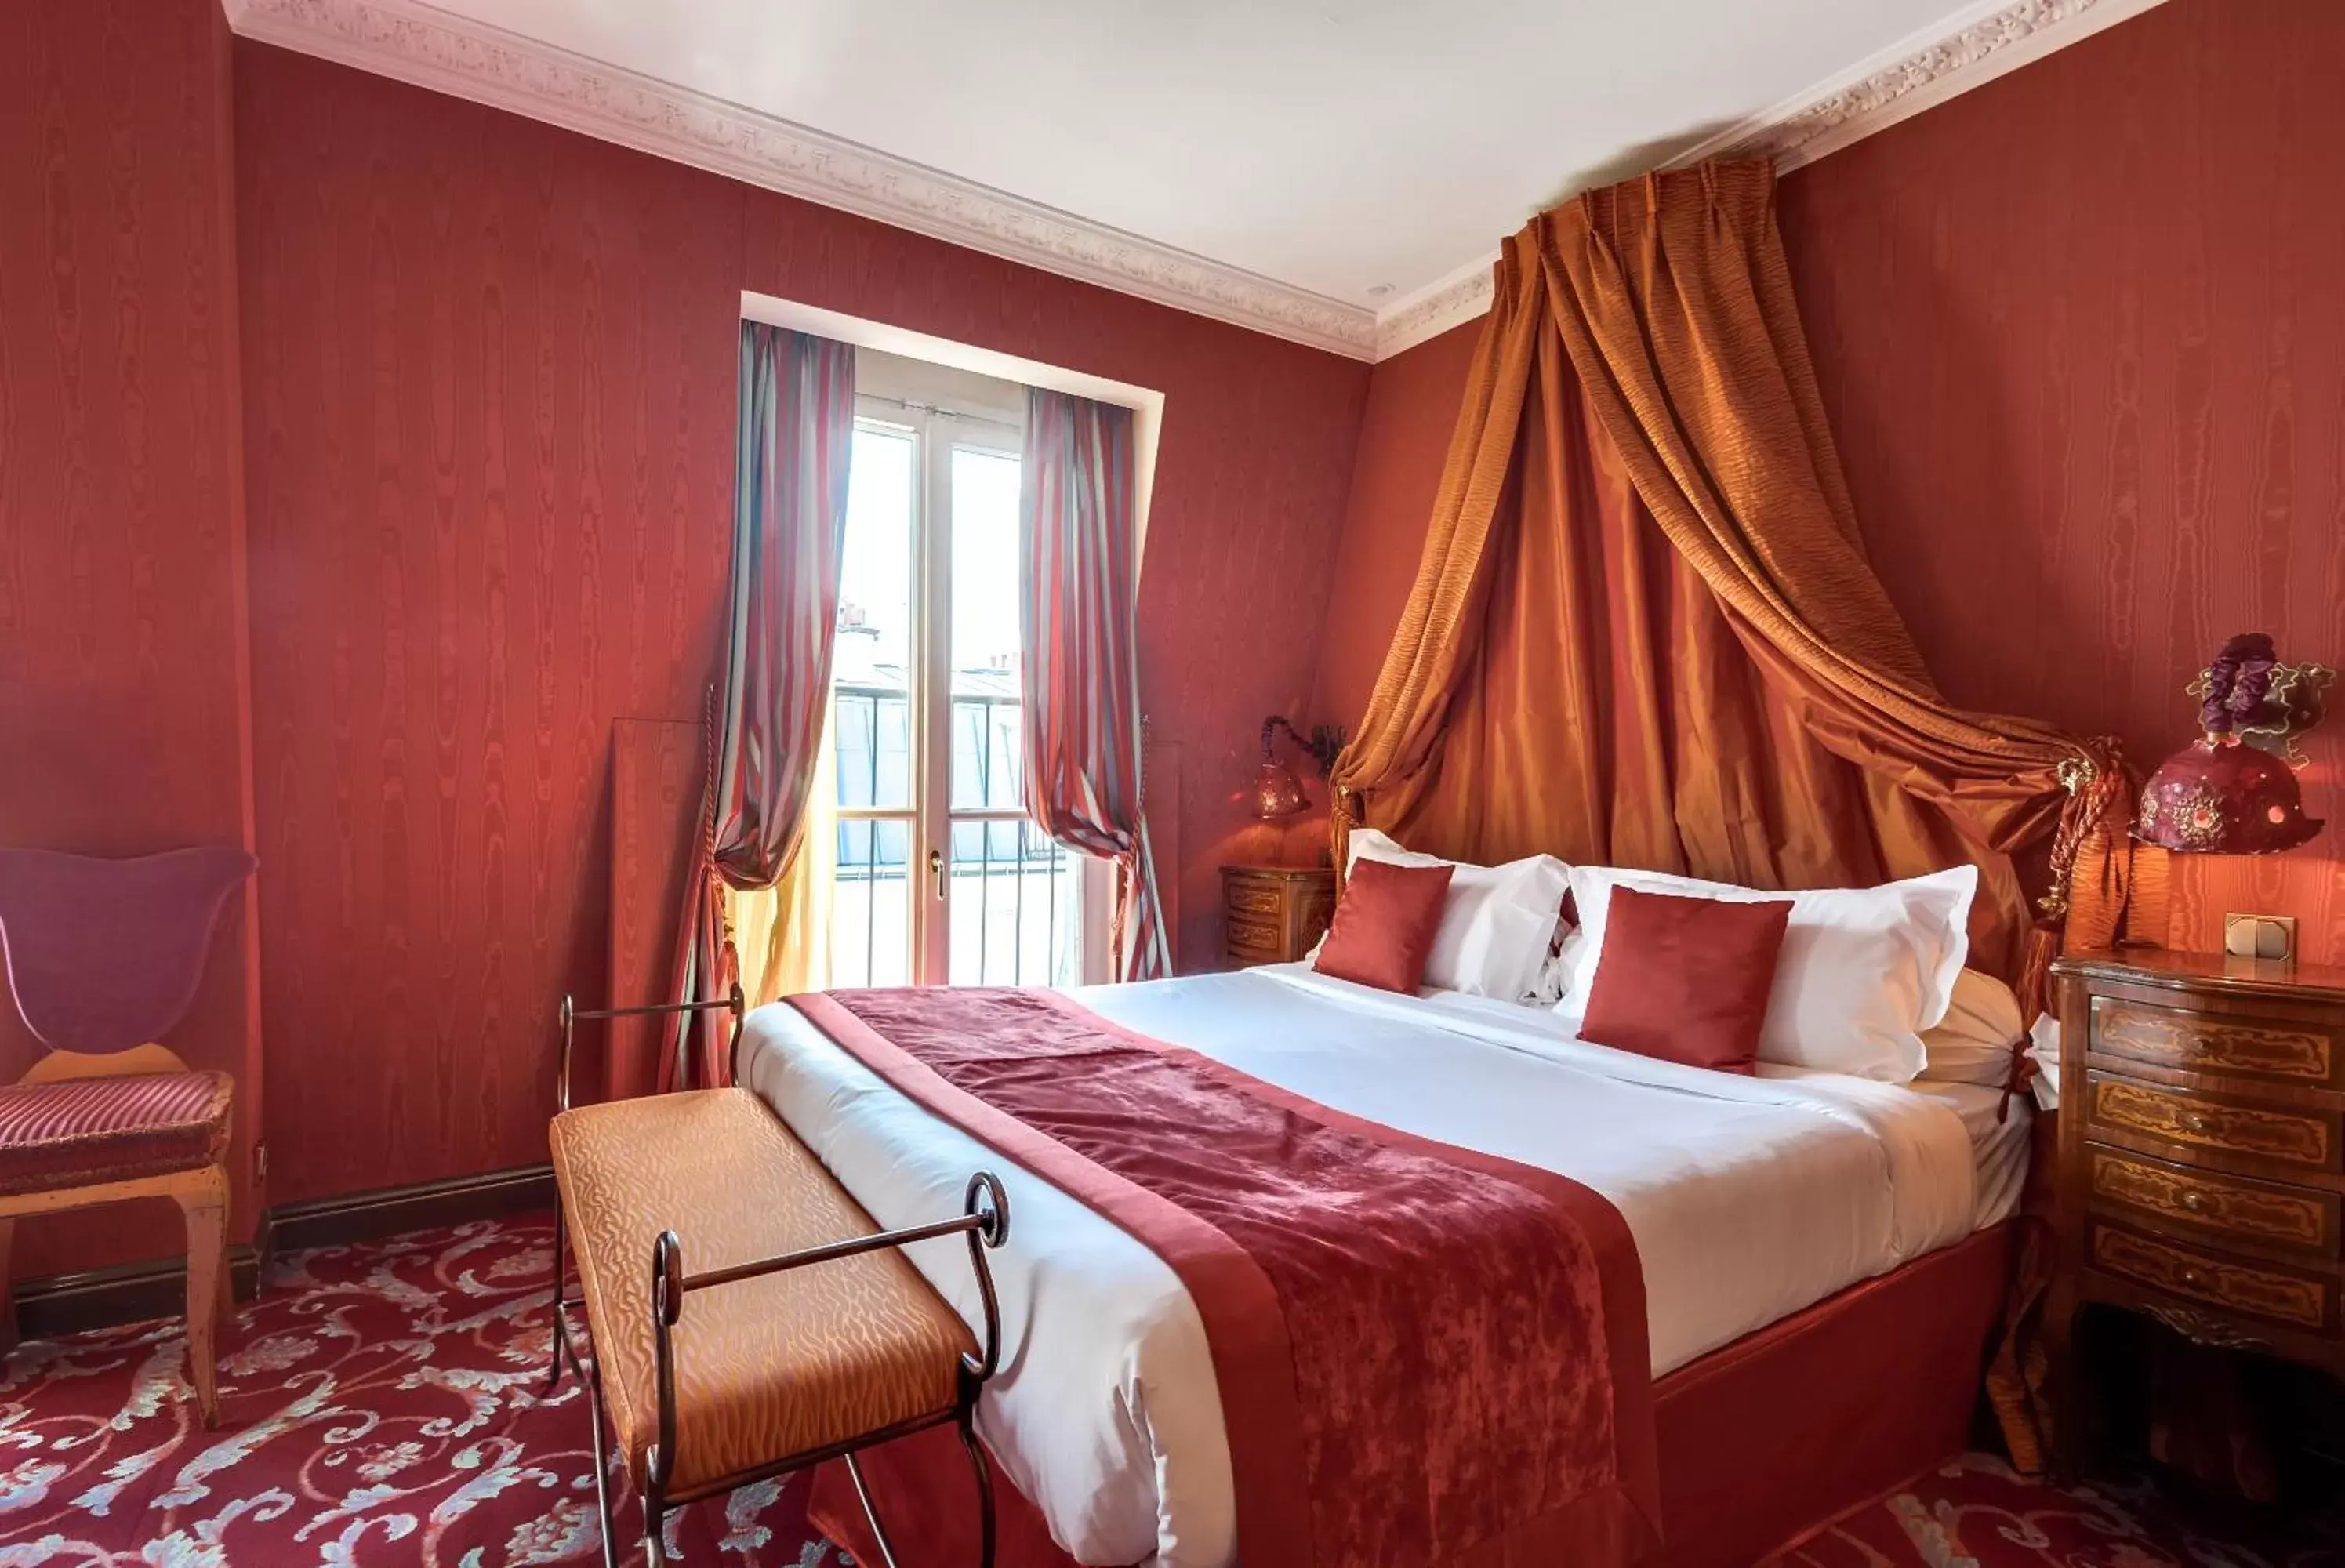 Bed, Room Photo in Villa Royale